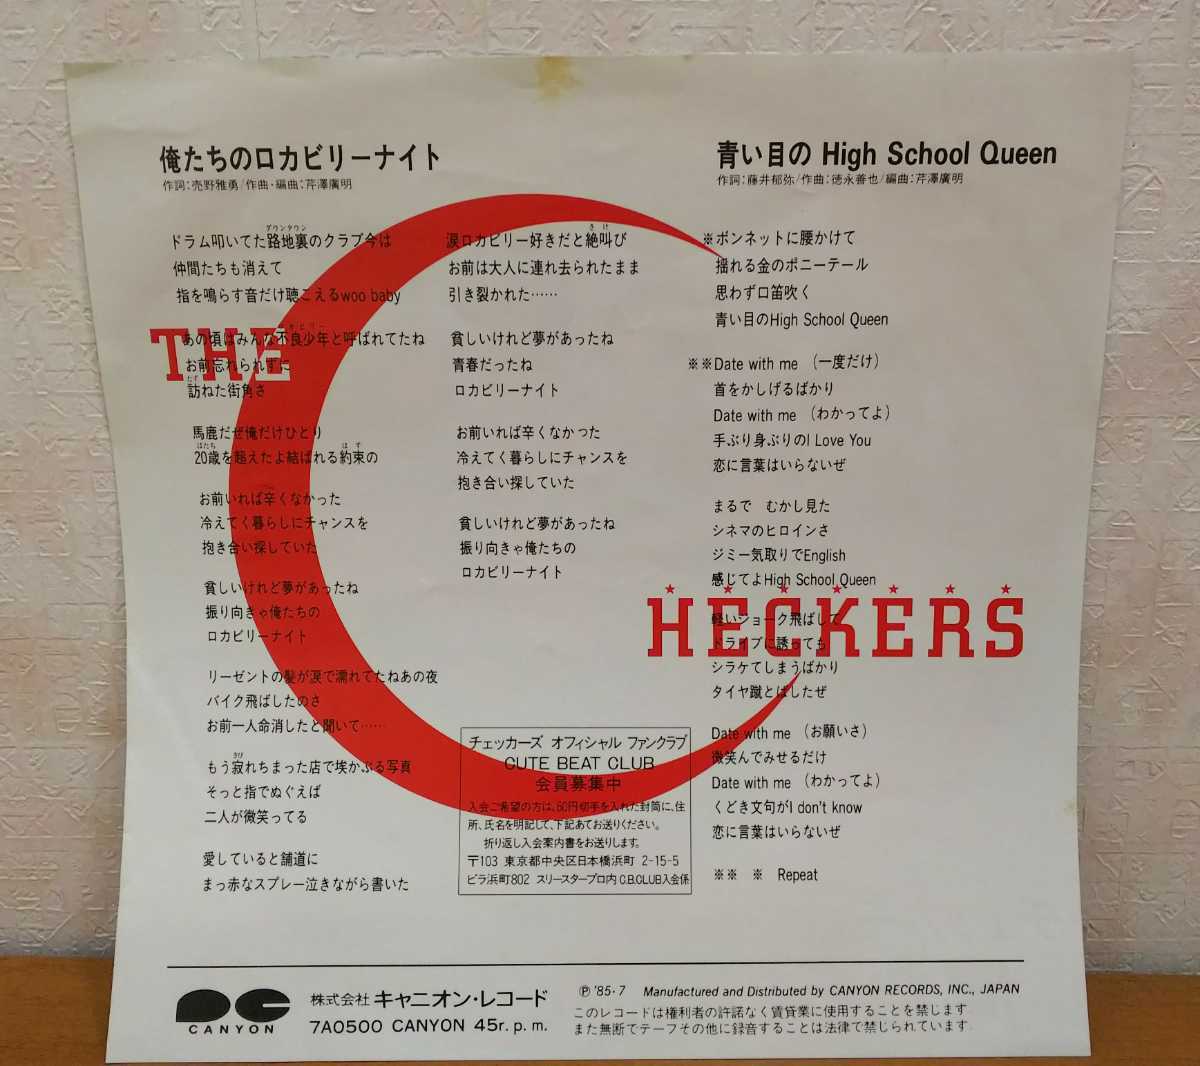 EP:チェッカーズ THE CHECKERS 俺たちのロカビリーナイト/青い目のHigh School Queen 7A0500 CANYON キャニオンレコード 1985*の画像2